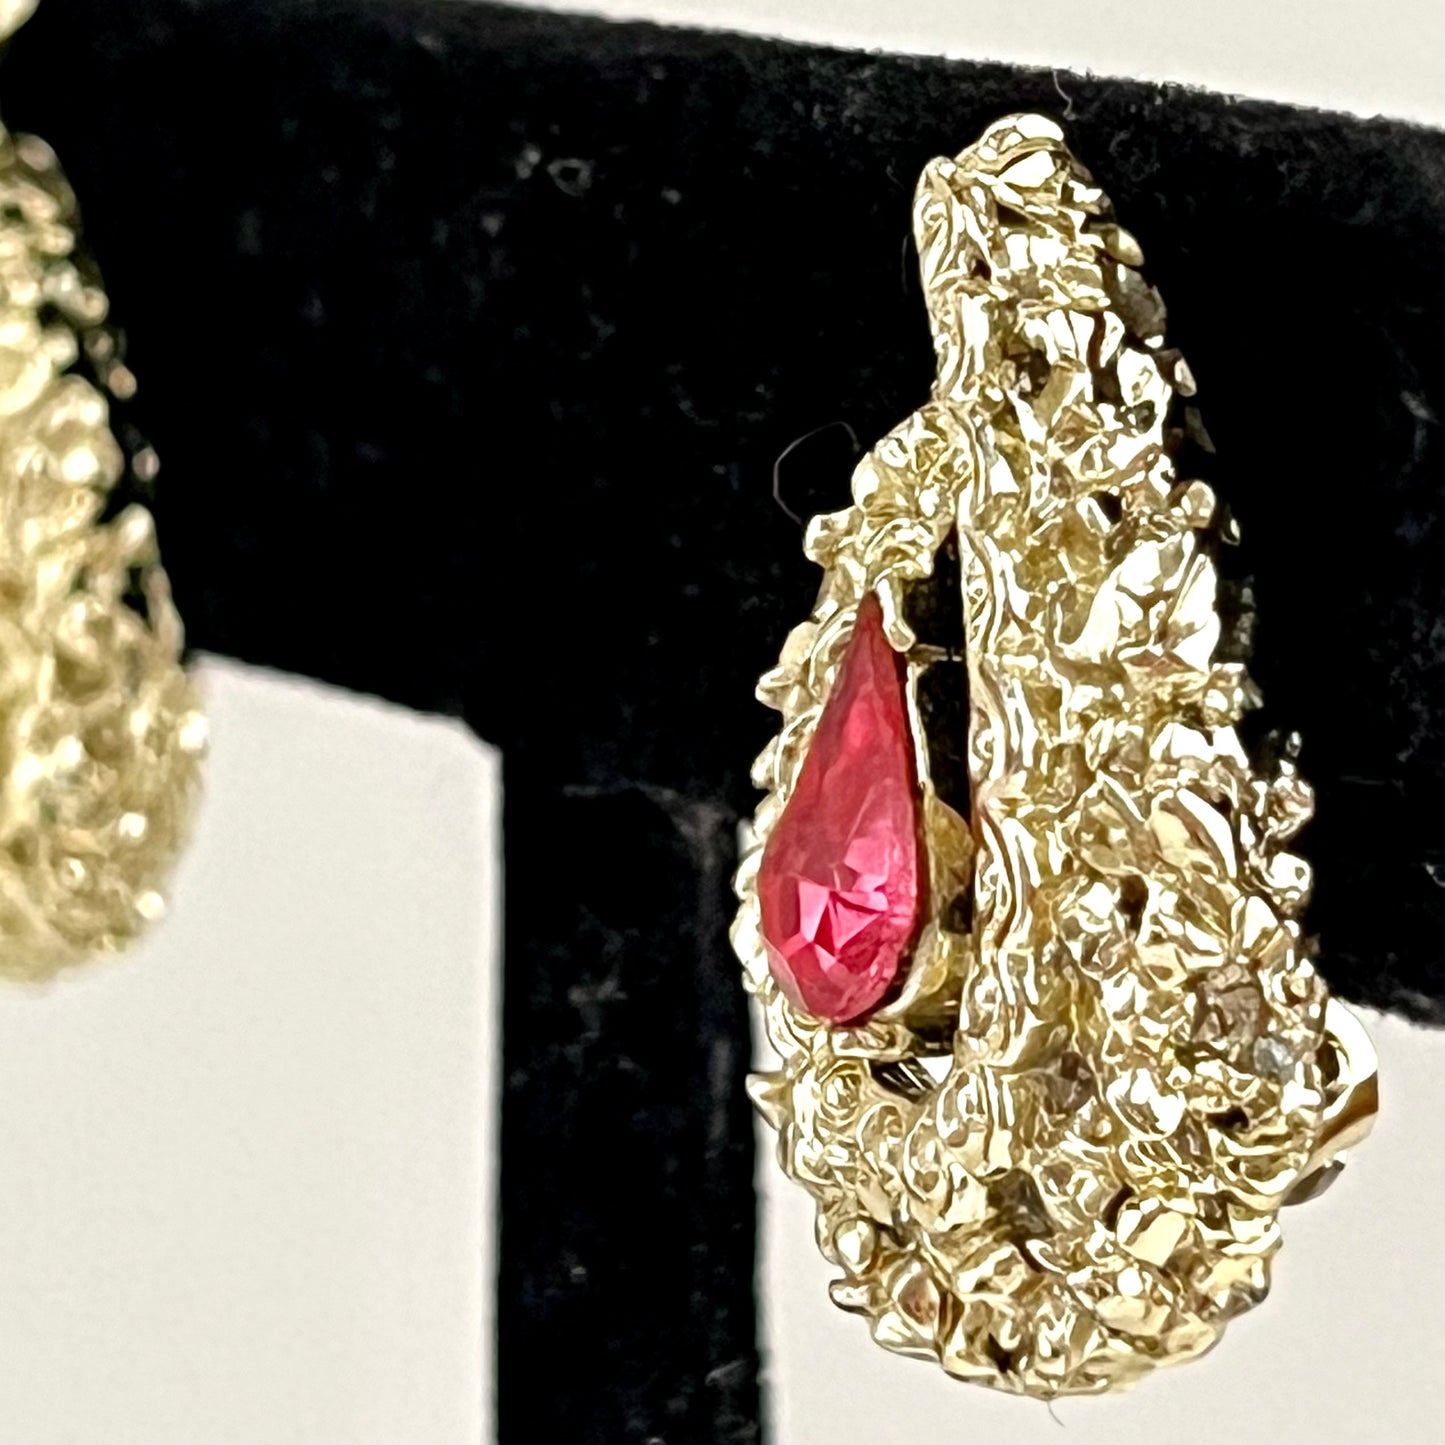 1960s Coro Pink Rhinestone Earrings